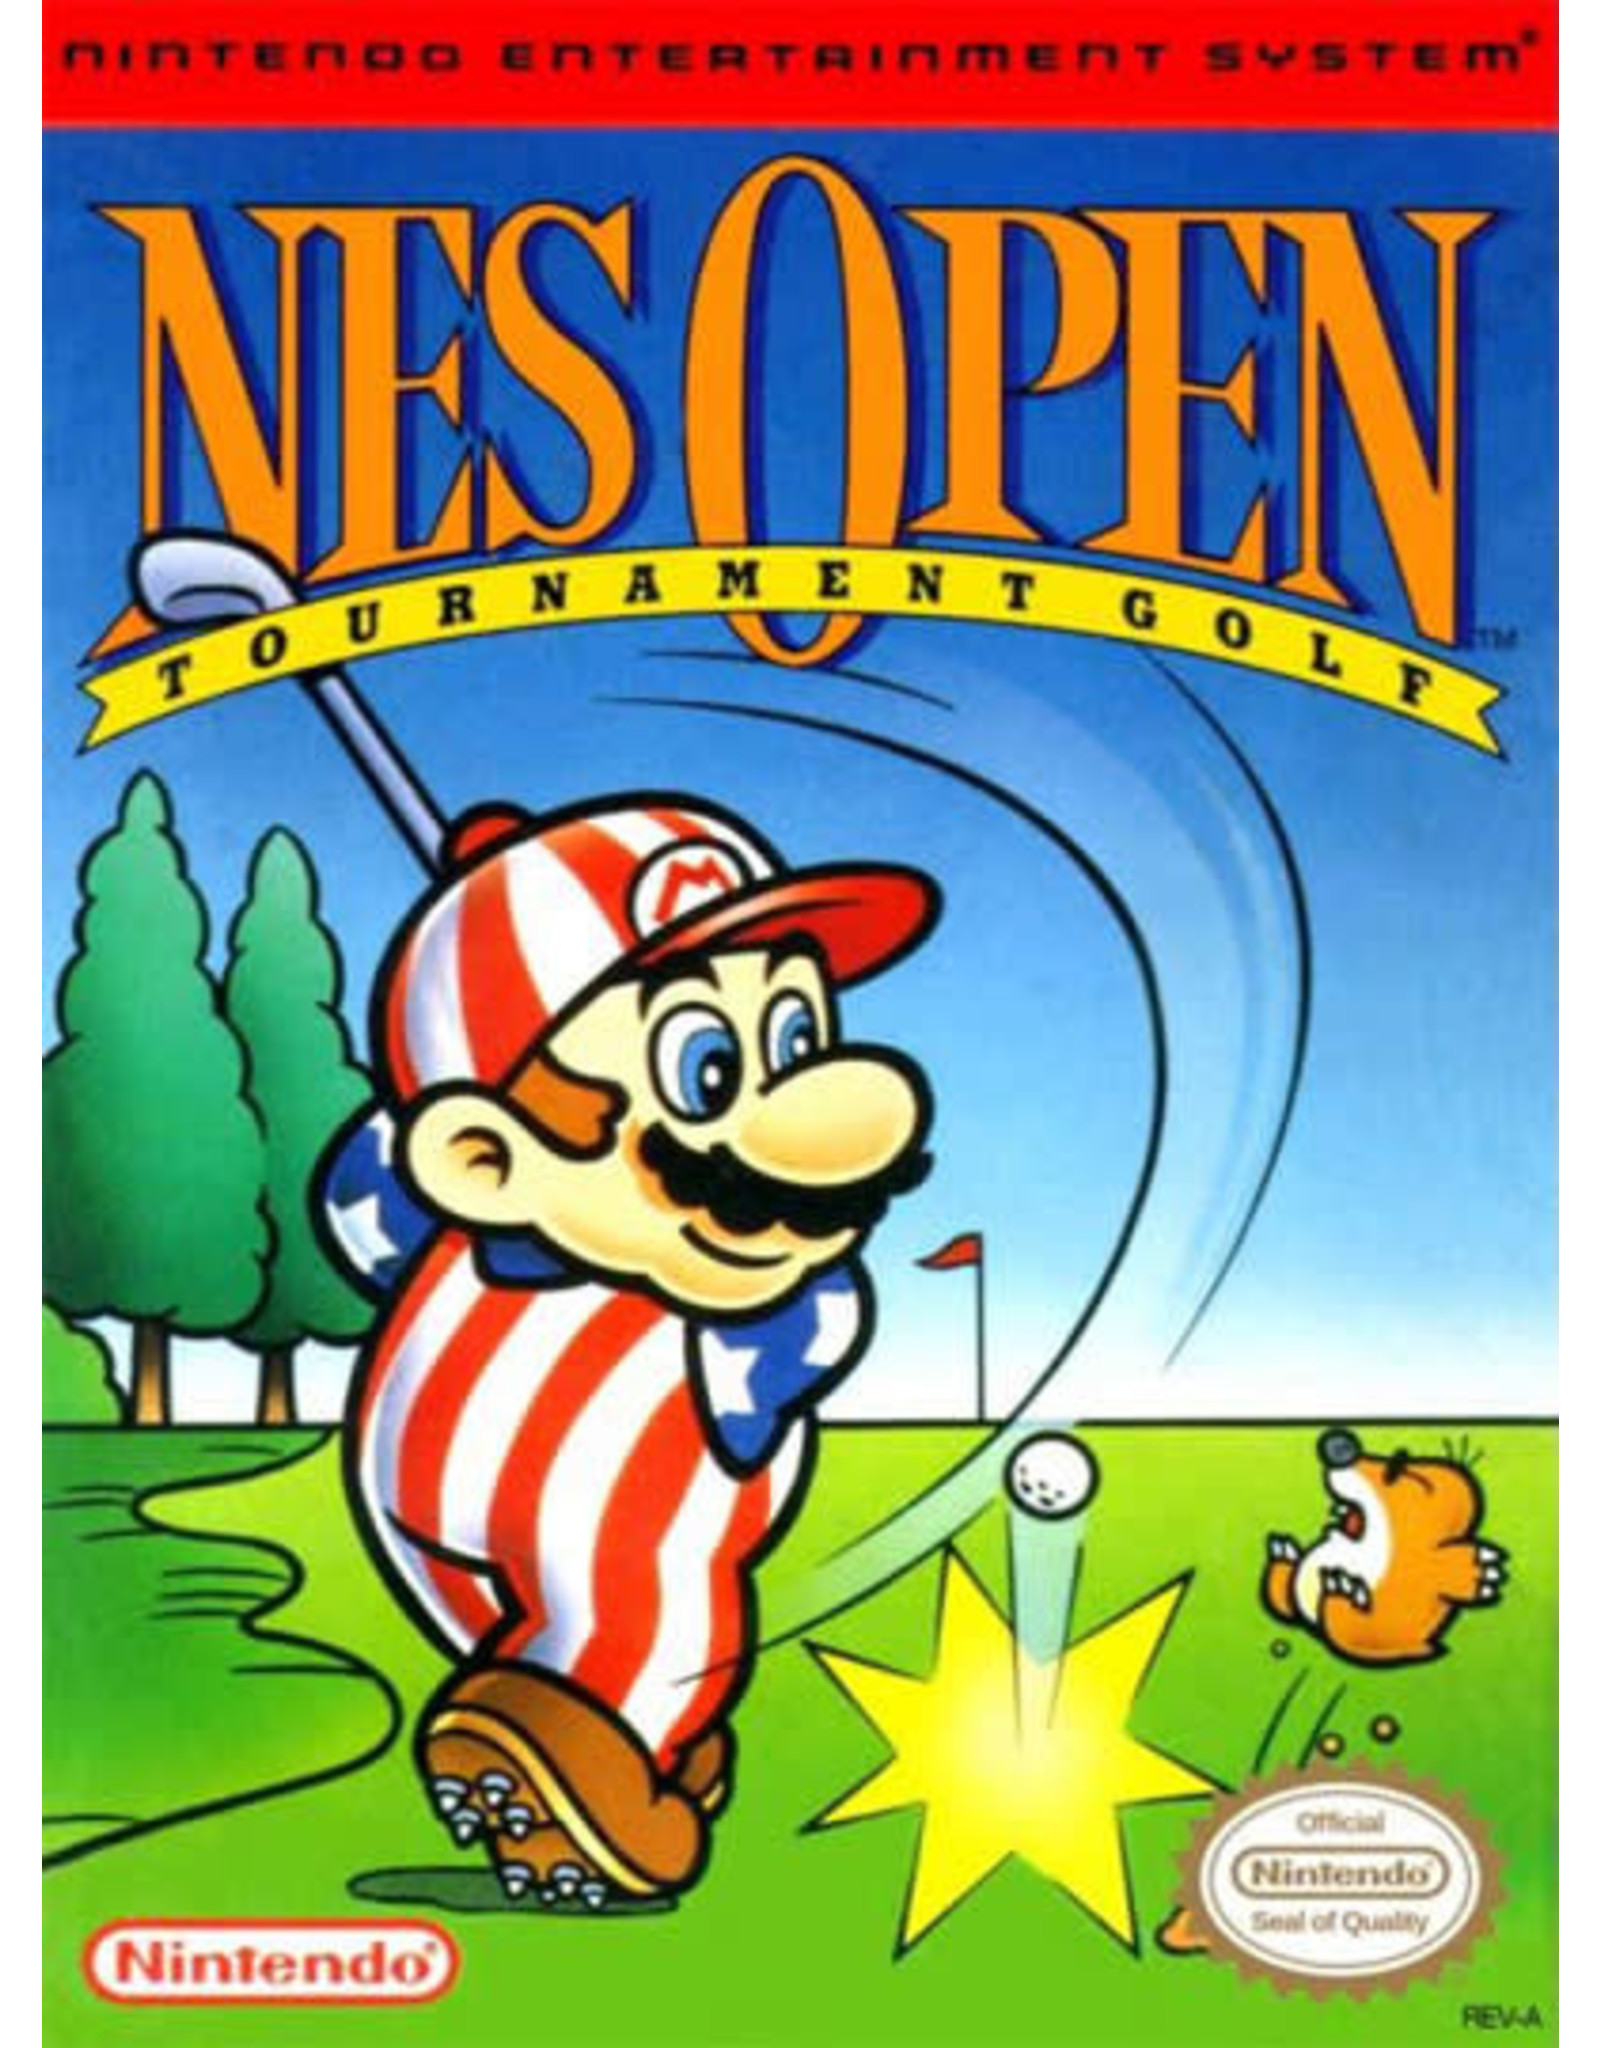 NES NES Open Tournament Golf (Damaged Box, No Manual)